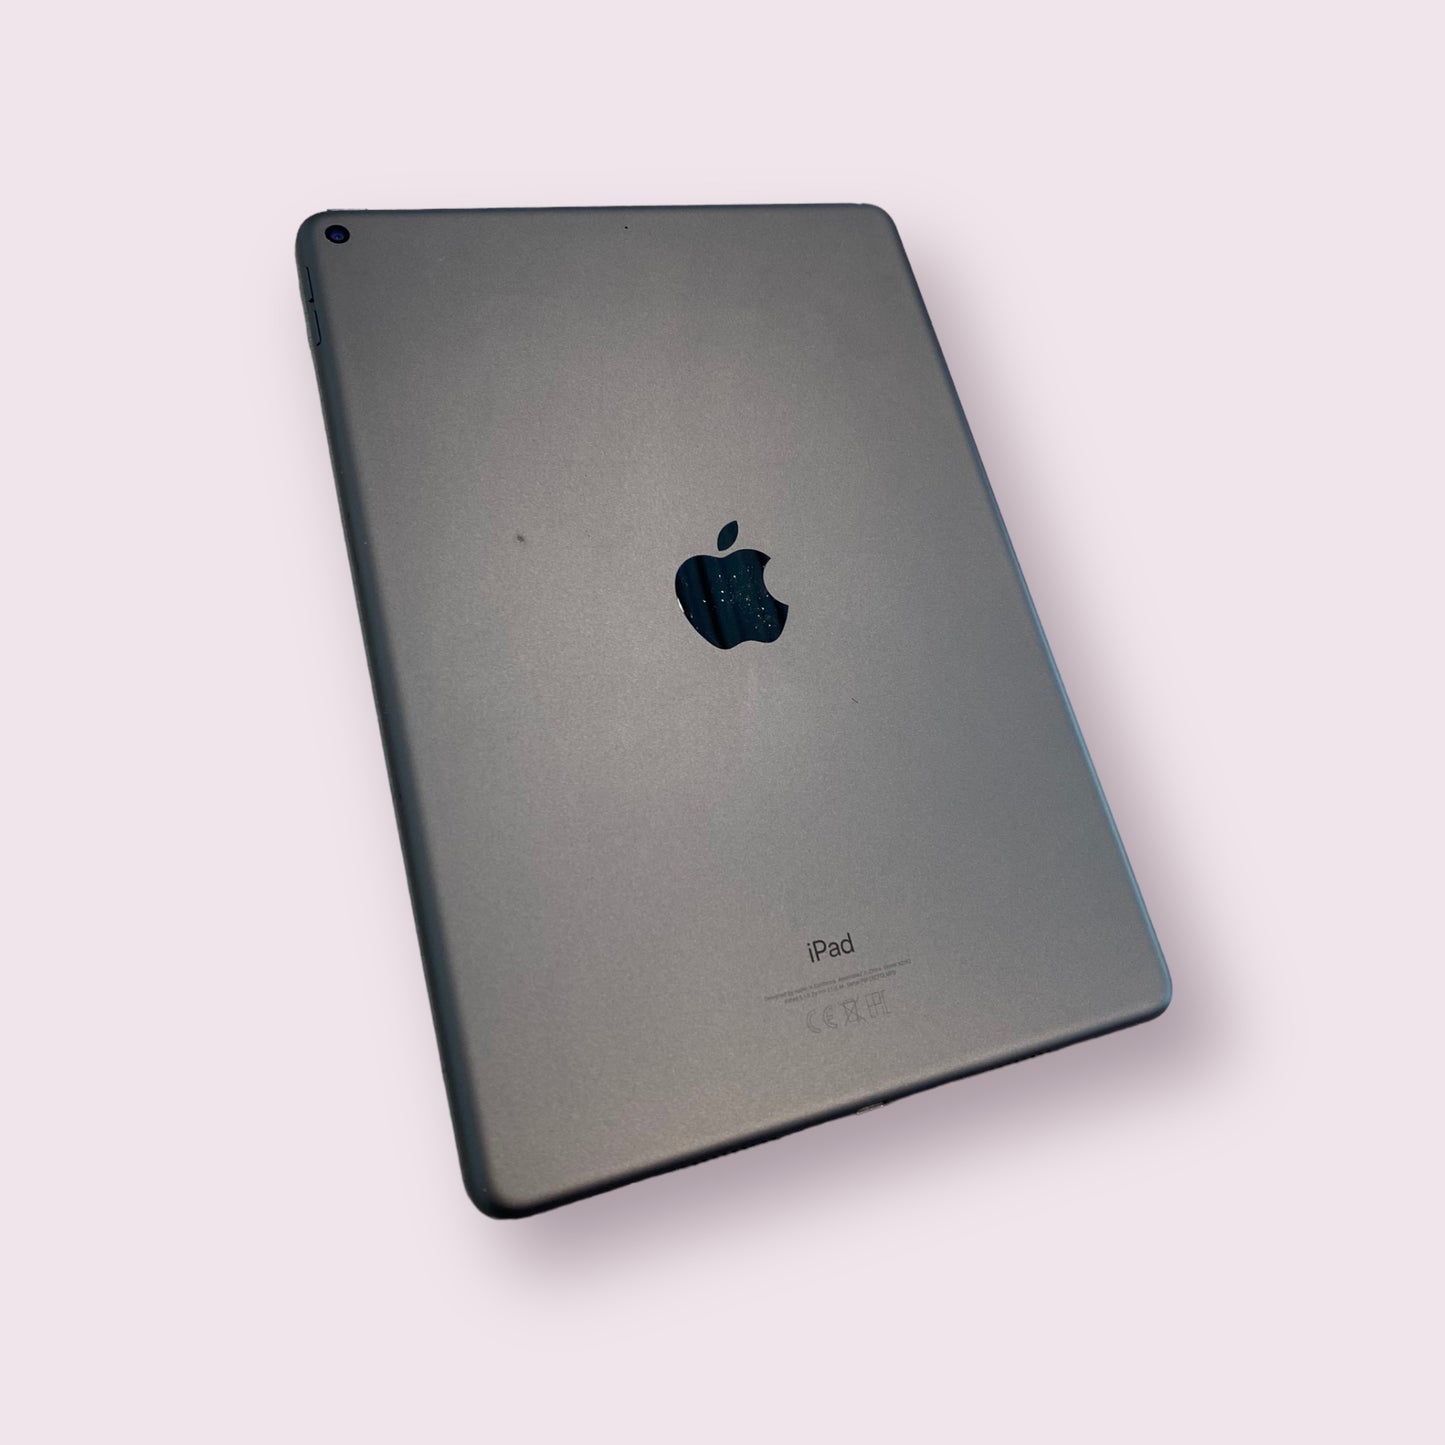 Apple iPad Air 3 64GB Space grey - WIFI - Grade B